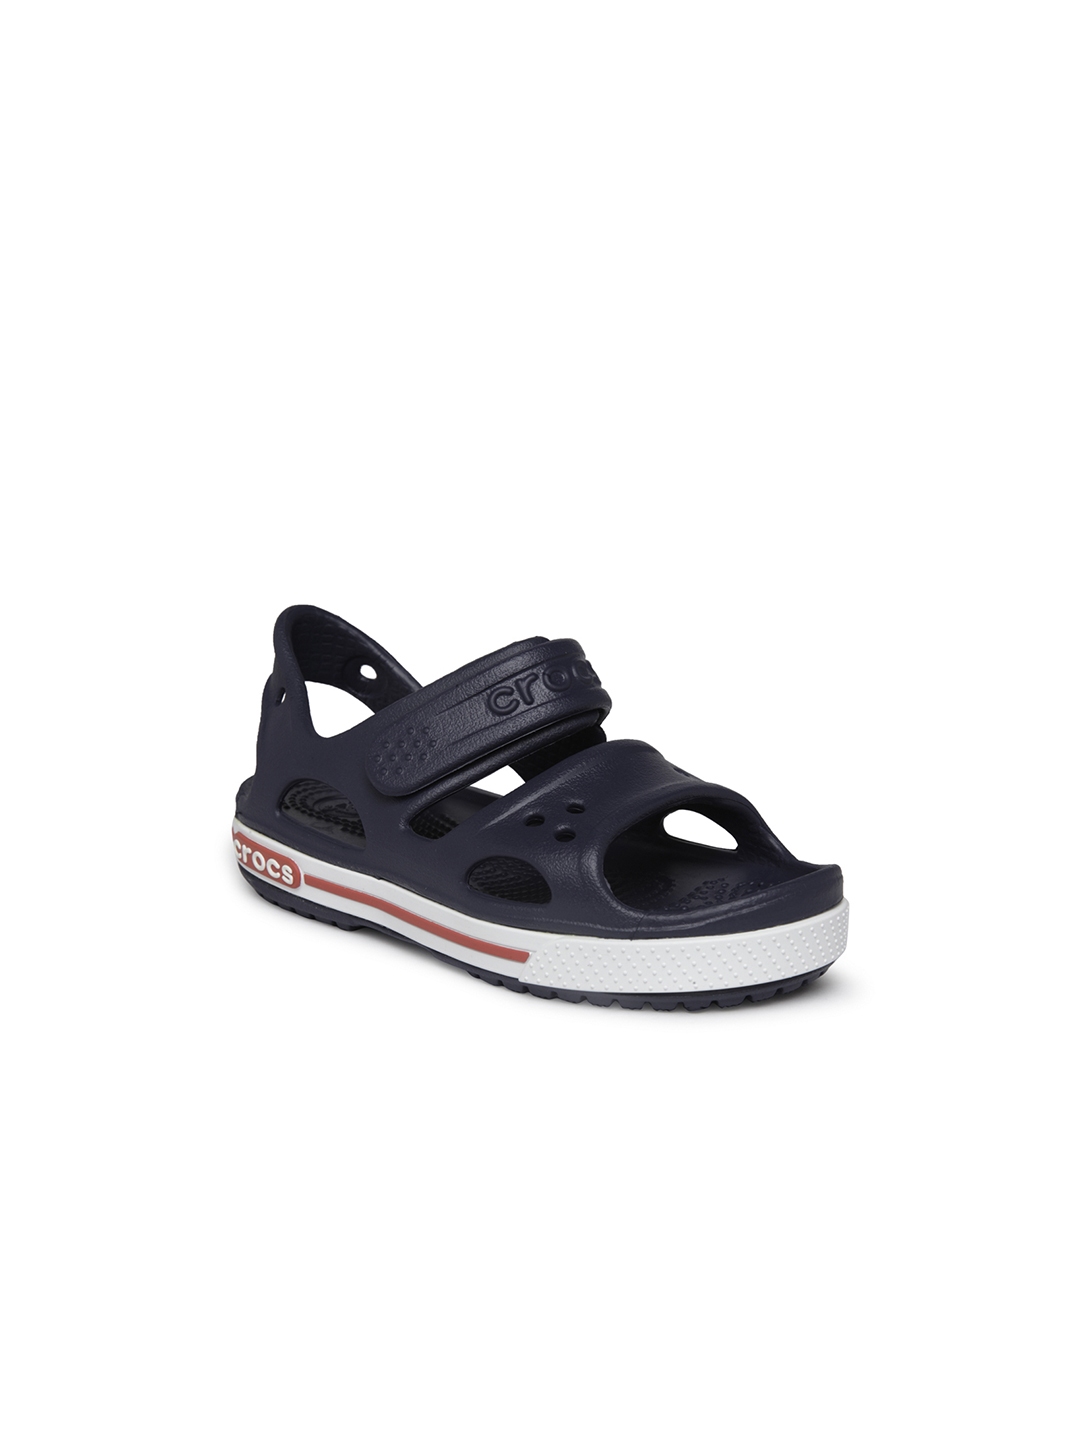 Buy Crocs Boys Blue Comfort Sandals - Sandals for Boys 2303163 | Myntra